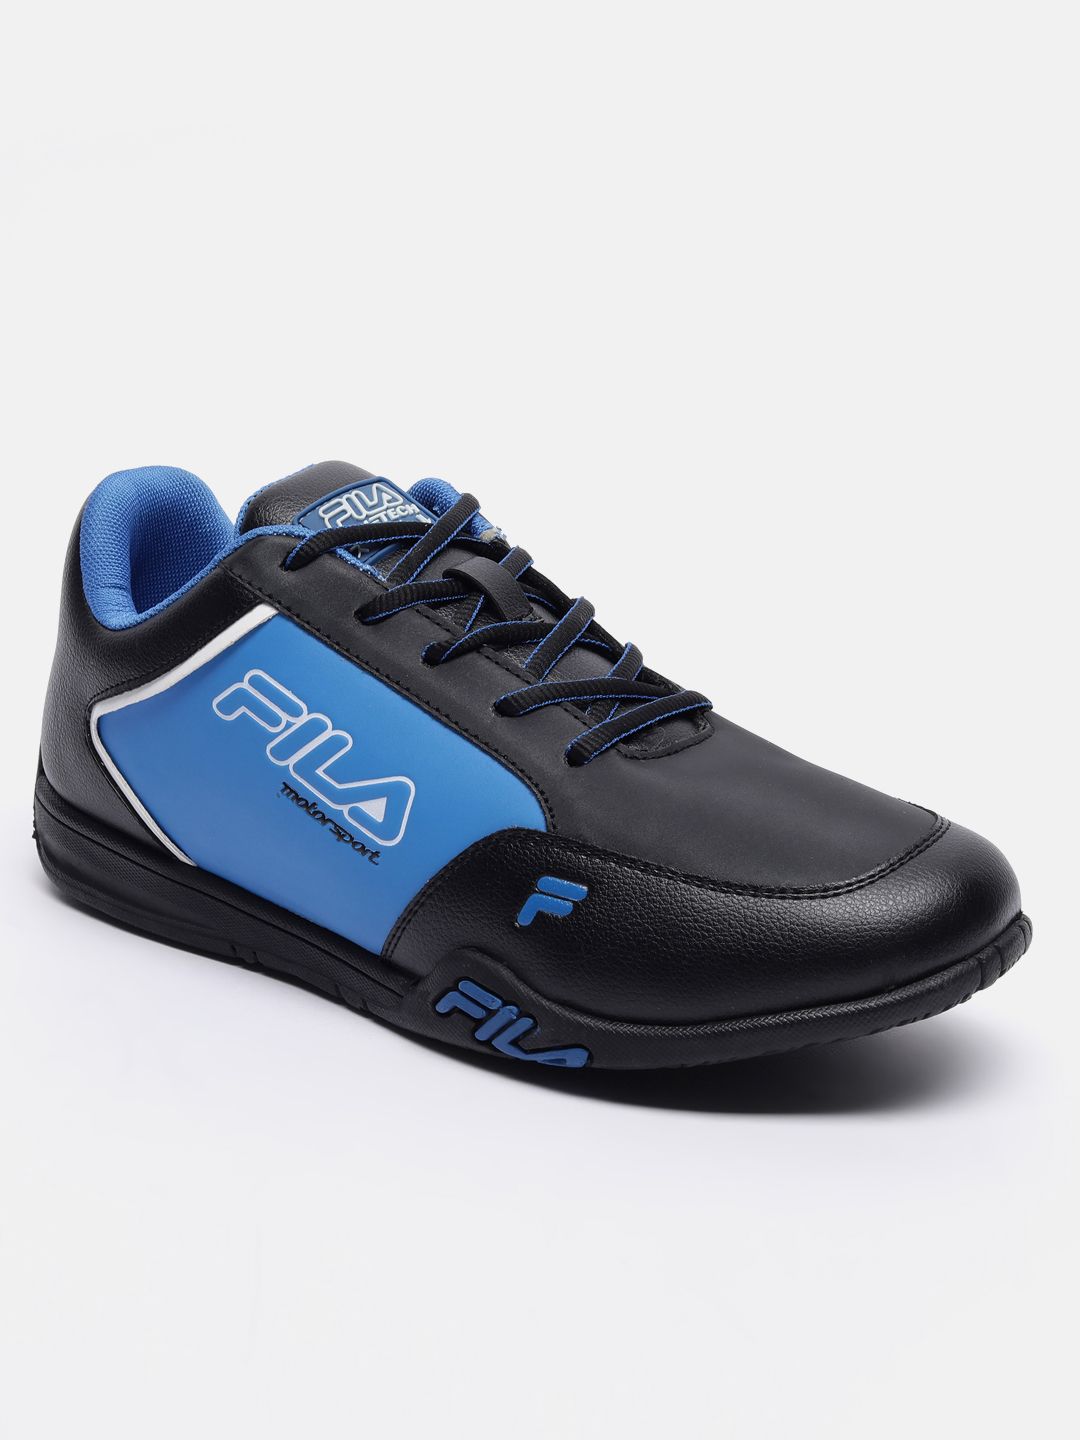 Buy Fila Sneakers & Sports Shoes for Men Online | FASHIOLA.in